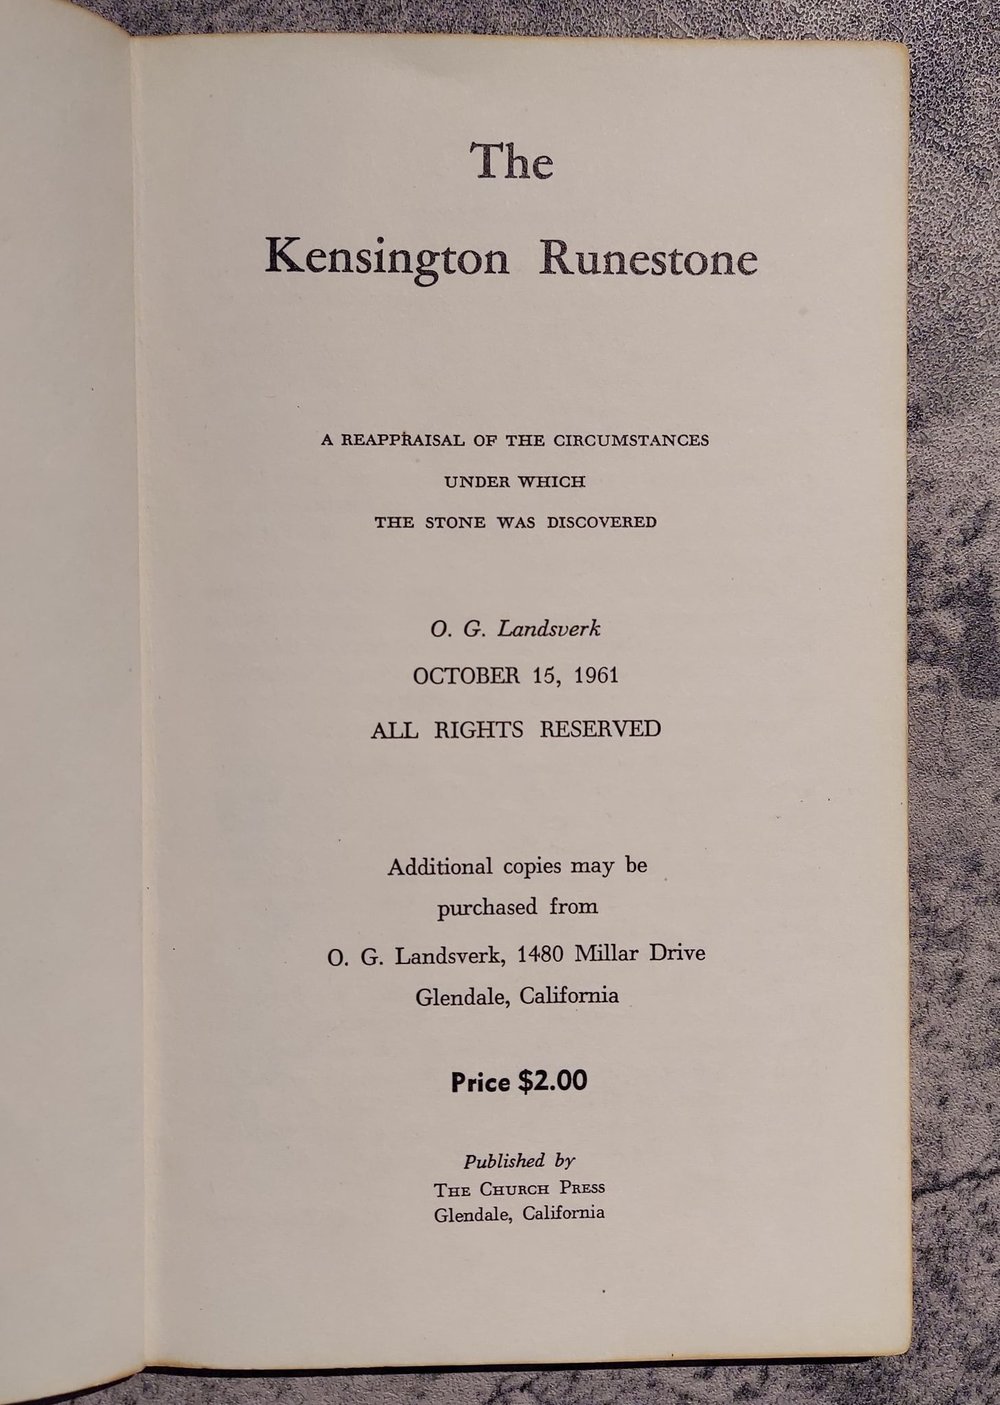 The Discovery of the Kensington Runestone: A Reappraisal, by O. G. Landsverk